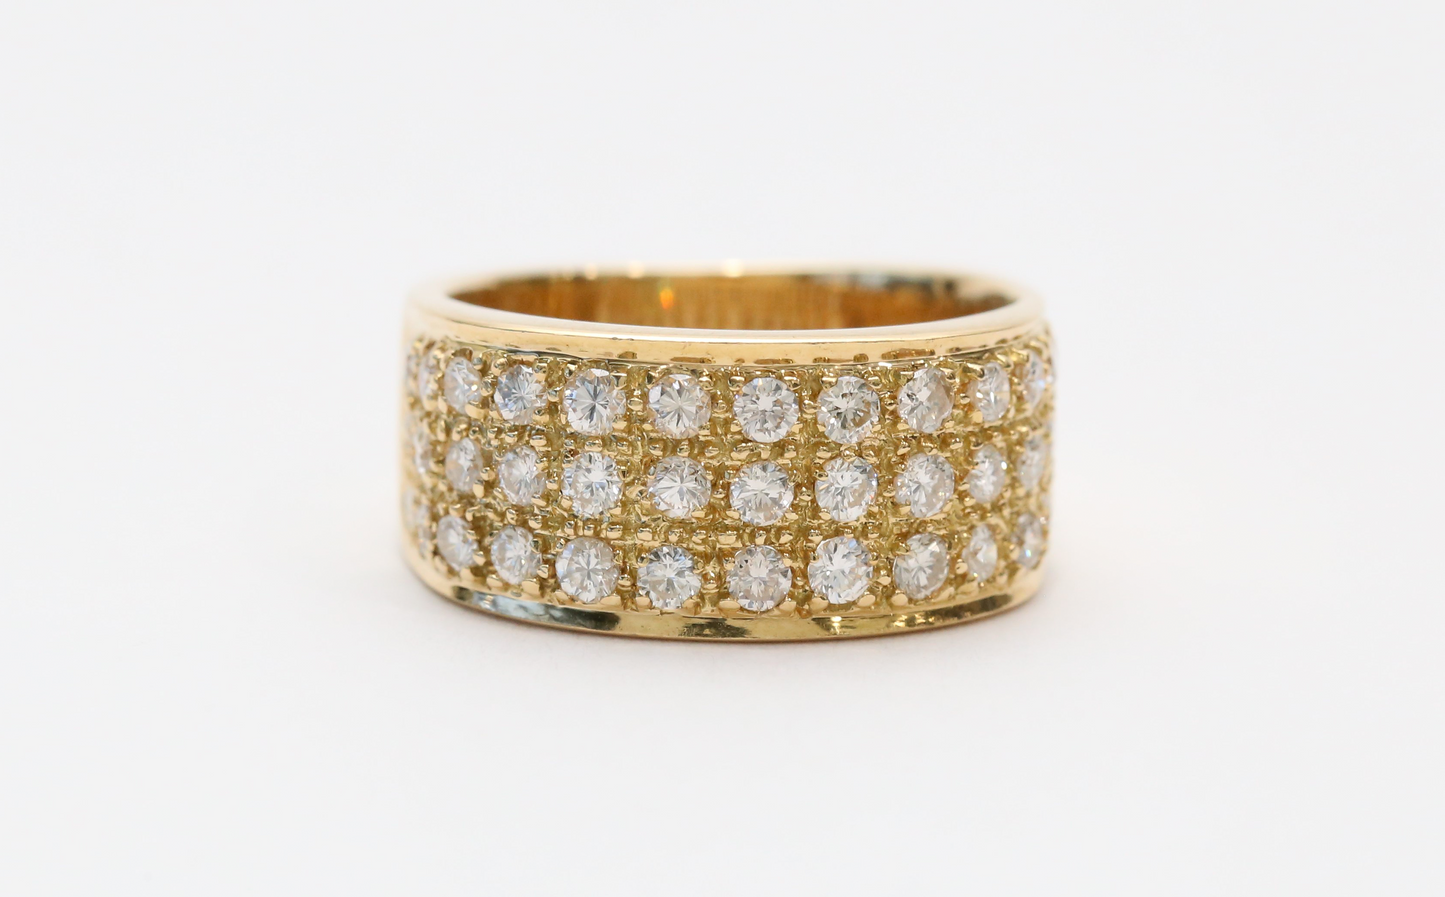 18k Yellow Gold Three-Row Diamond Ring, Size 6.5 - 8.6g